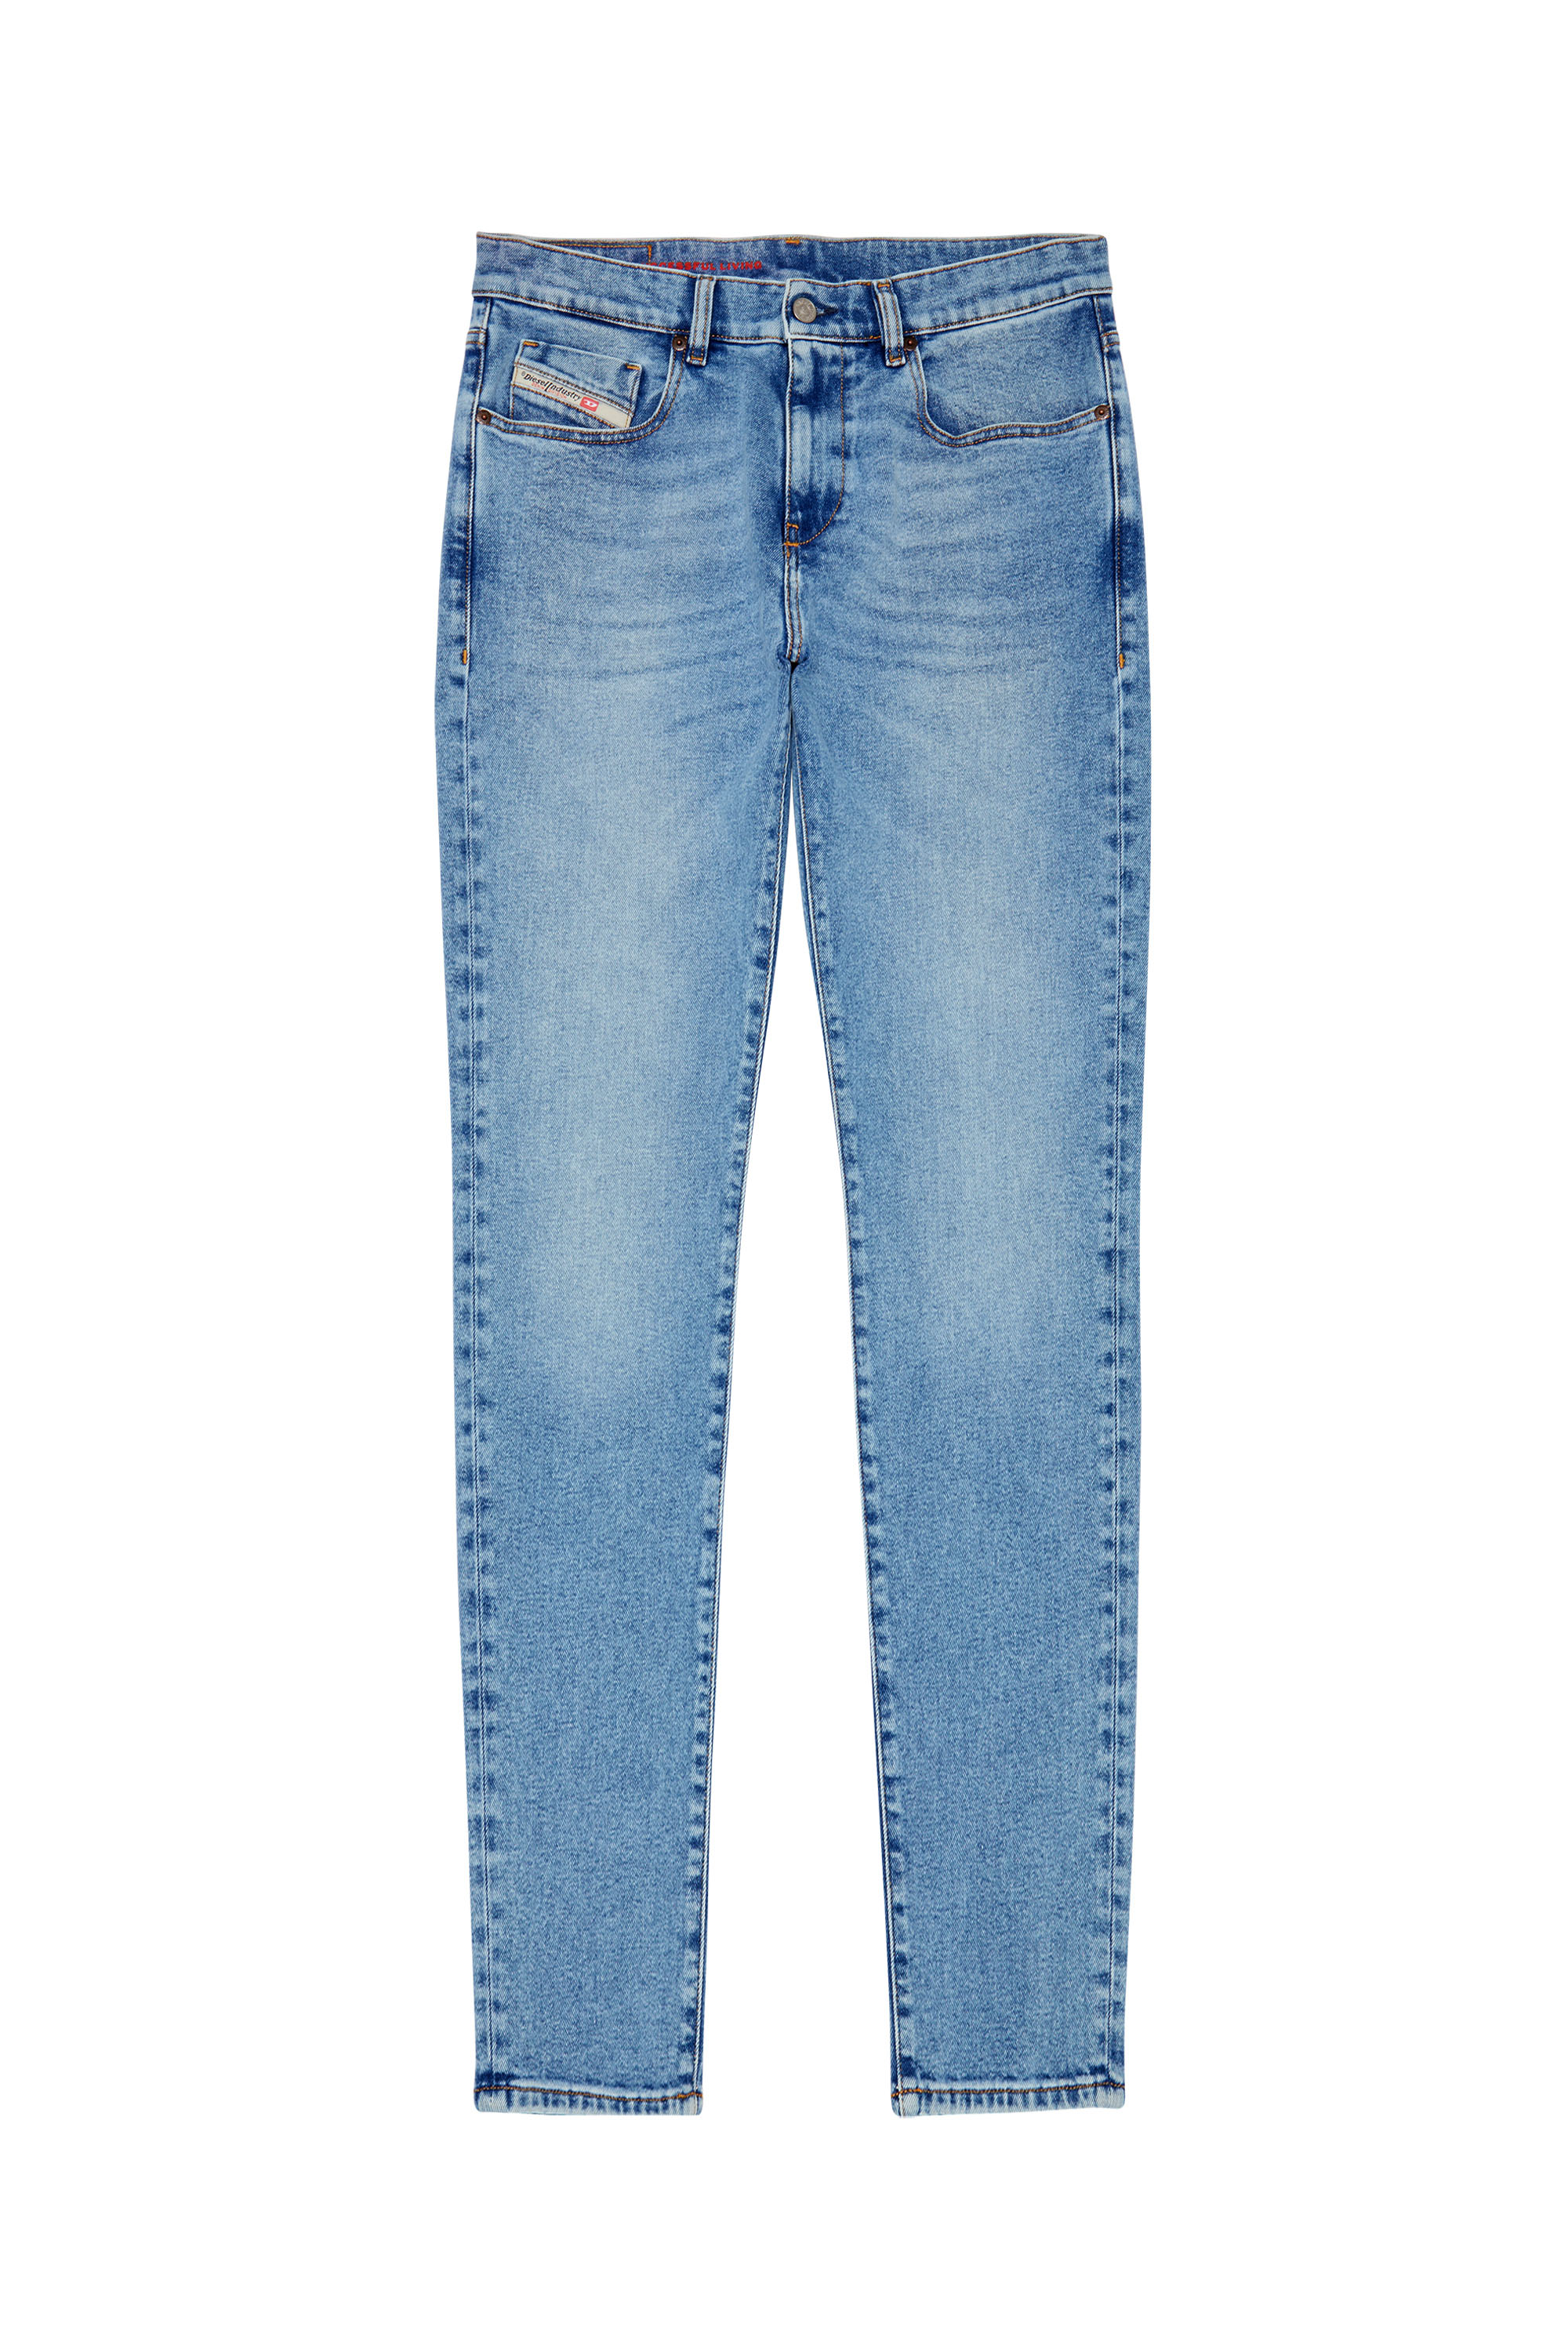 2019 D-STRUKT 09B92 Slim Jeans, Hellblau - Jeans